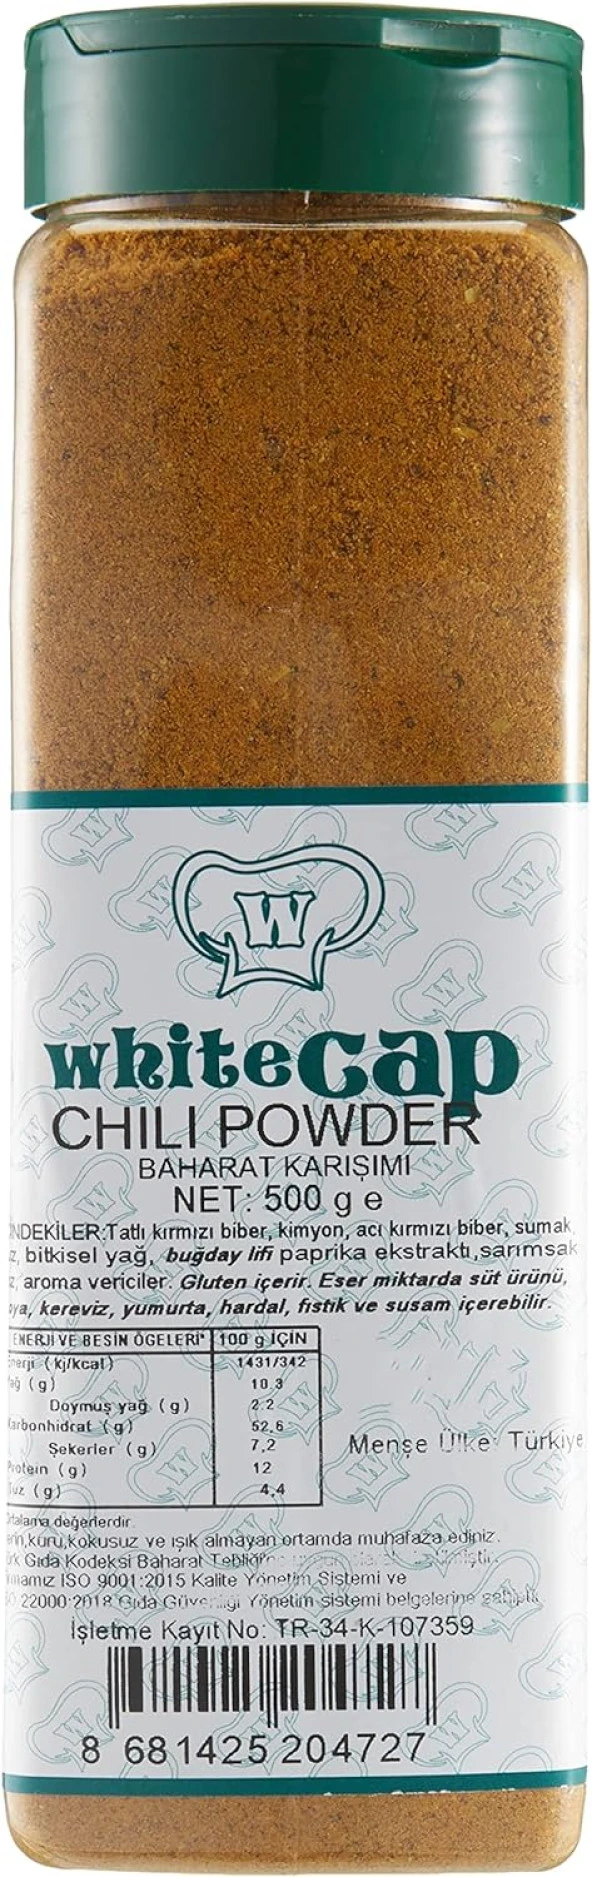 Life Whitecap Chili Powder Baharatı Büyük Pet 500 Gr